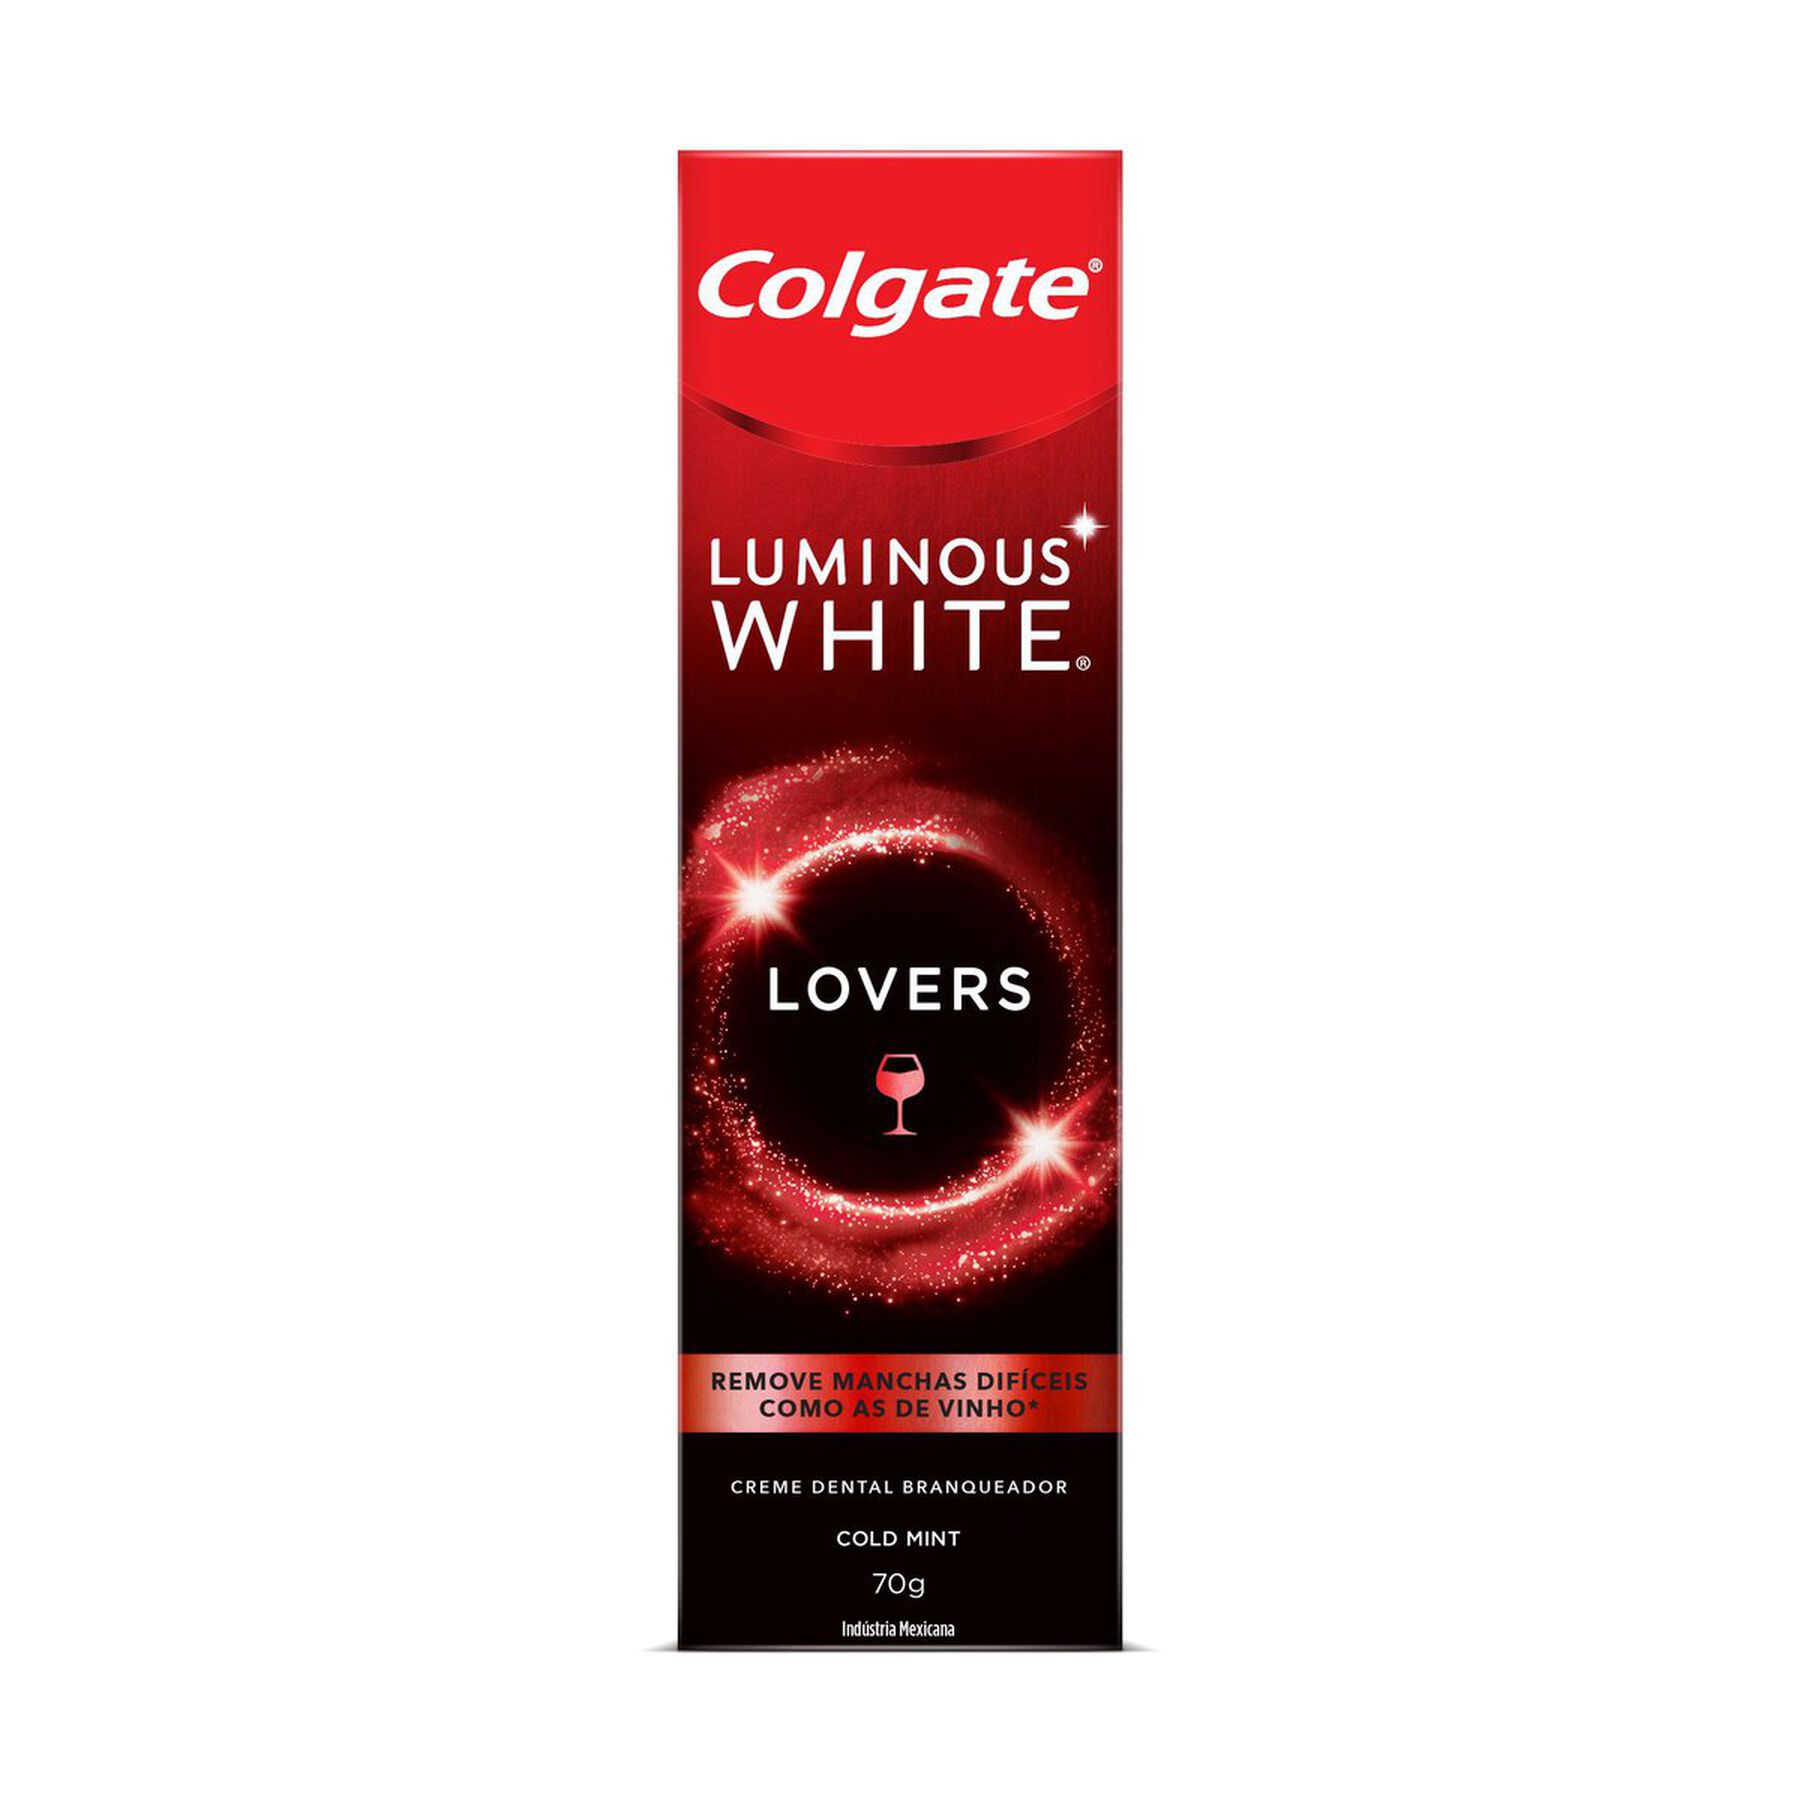 Creme Dental Clareador Colgate Luminous White Lovers Manchas de Vinho 70g